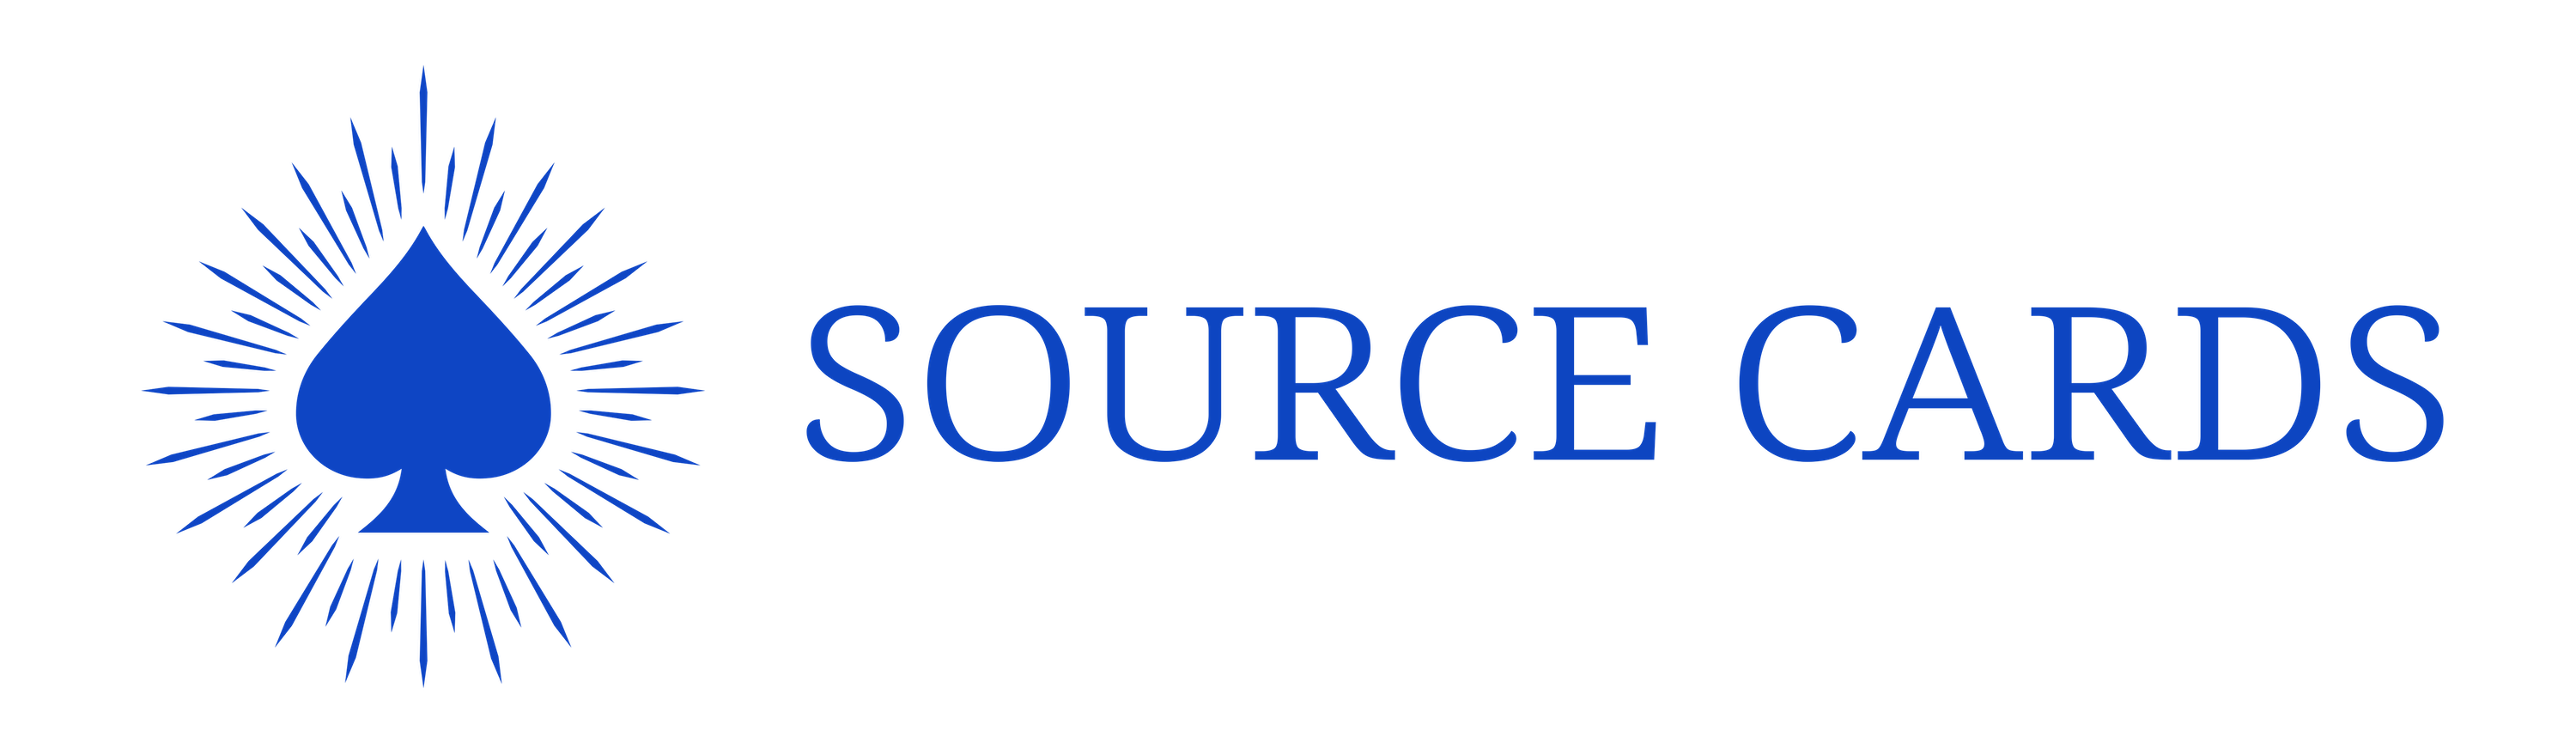 Source Cards logo